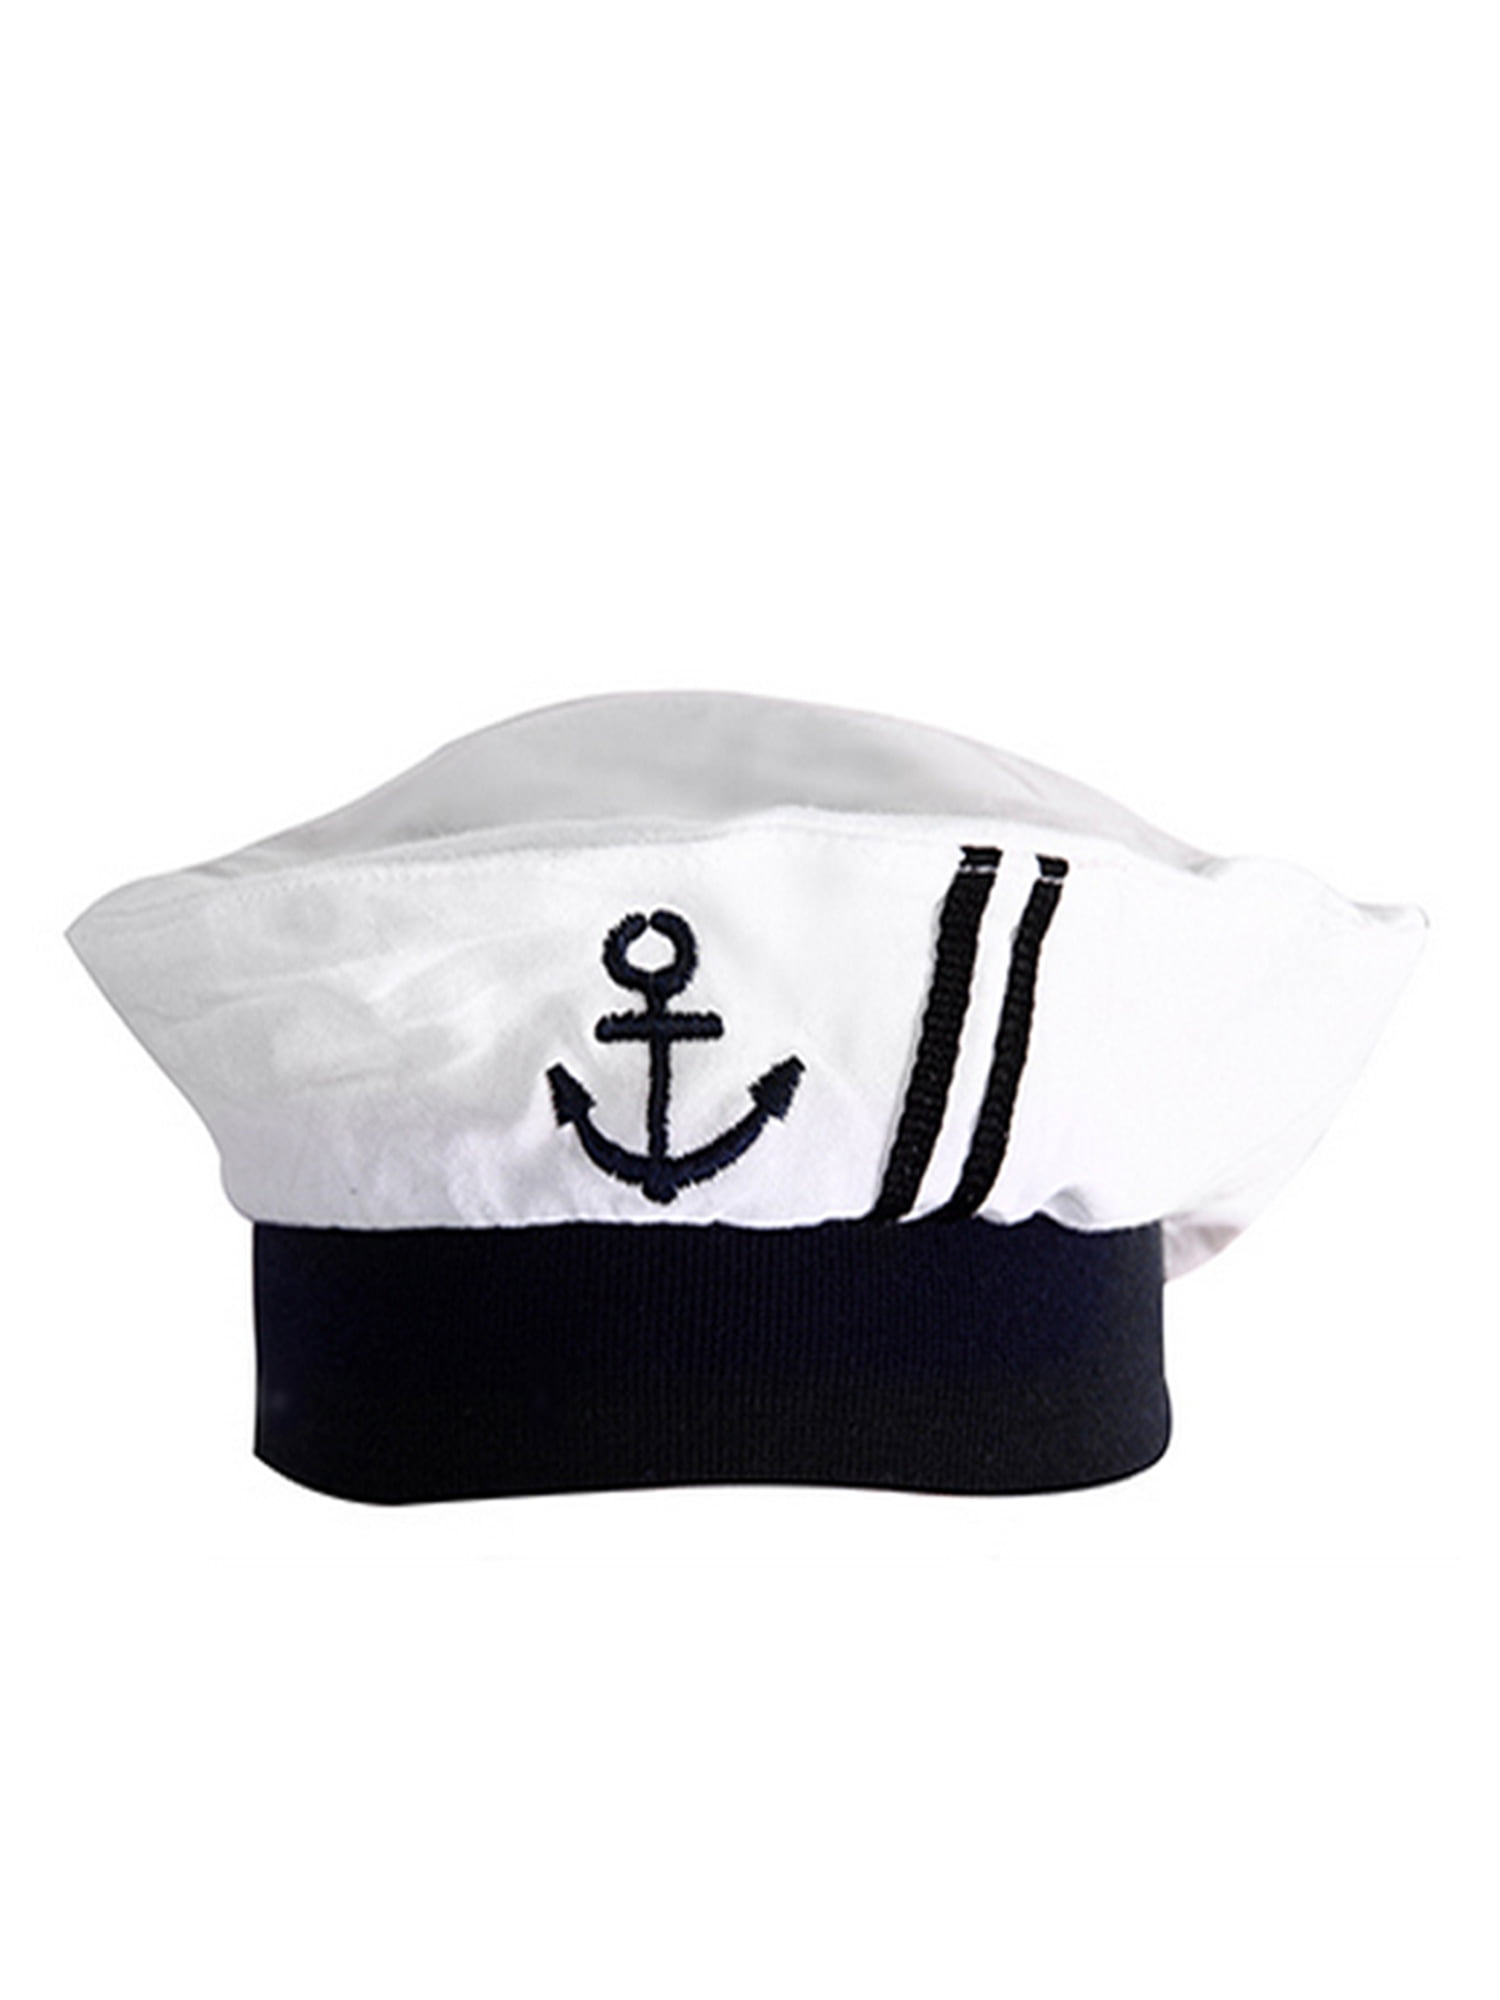 Nautical Sailor Embroidered Baby Boy Hat, 3-12 Months (White) - Walmart.com